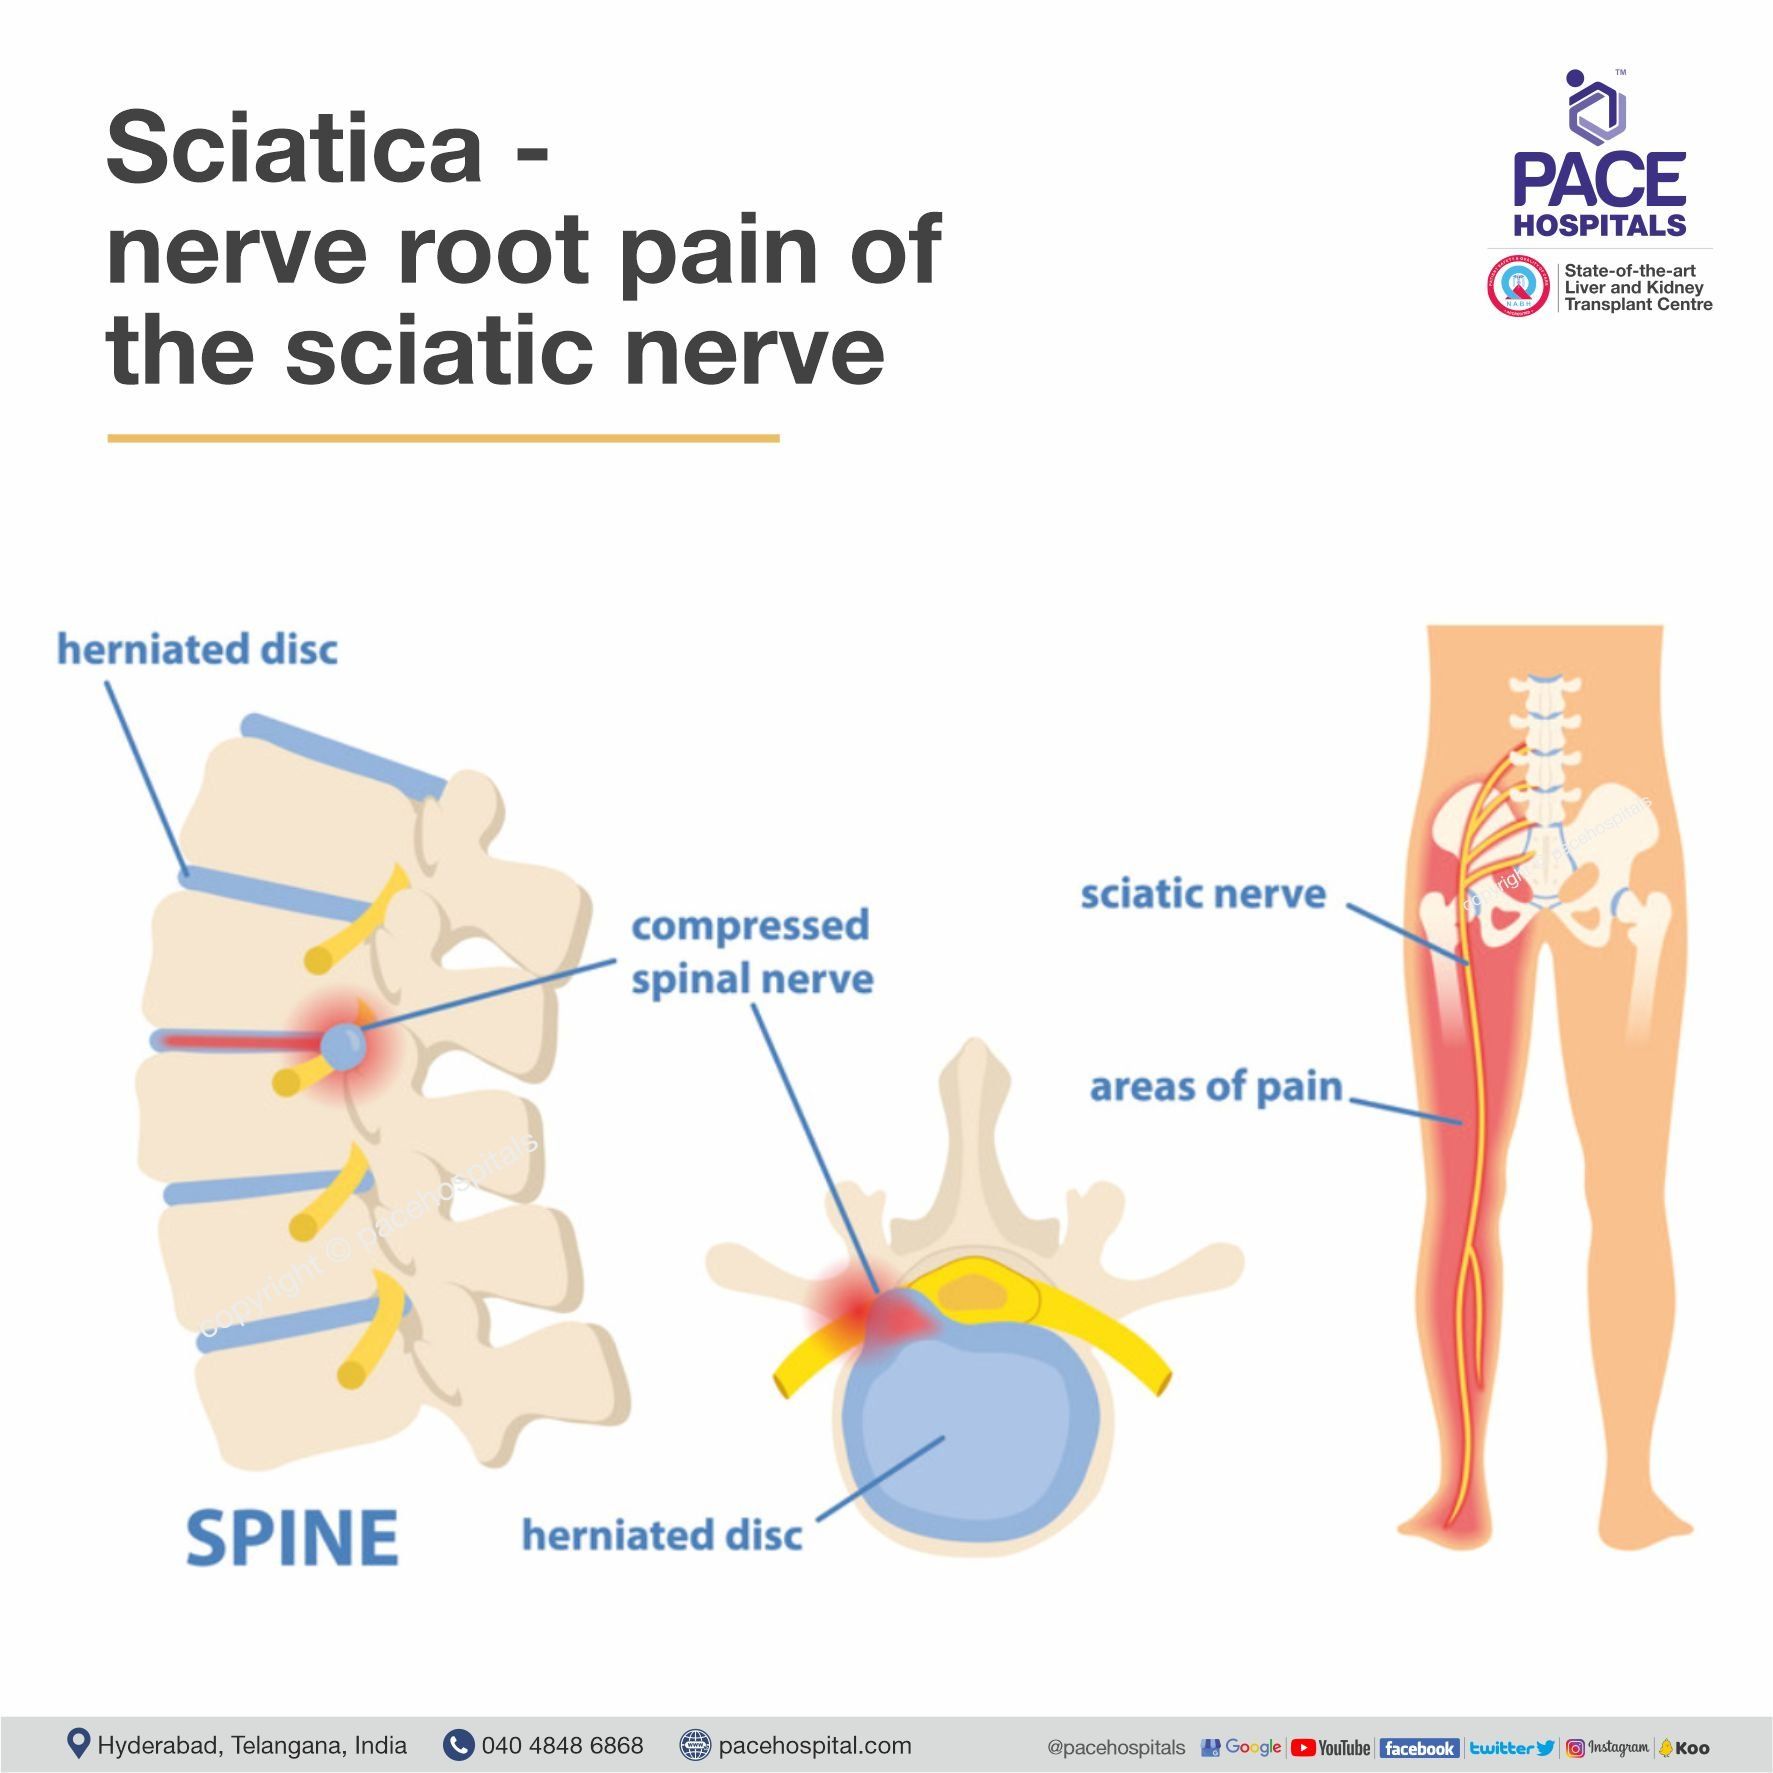 Sciatica (nerve root pain of the sciatic nerve)